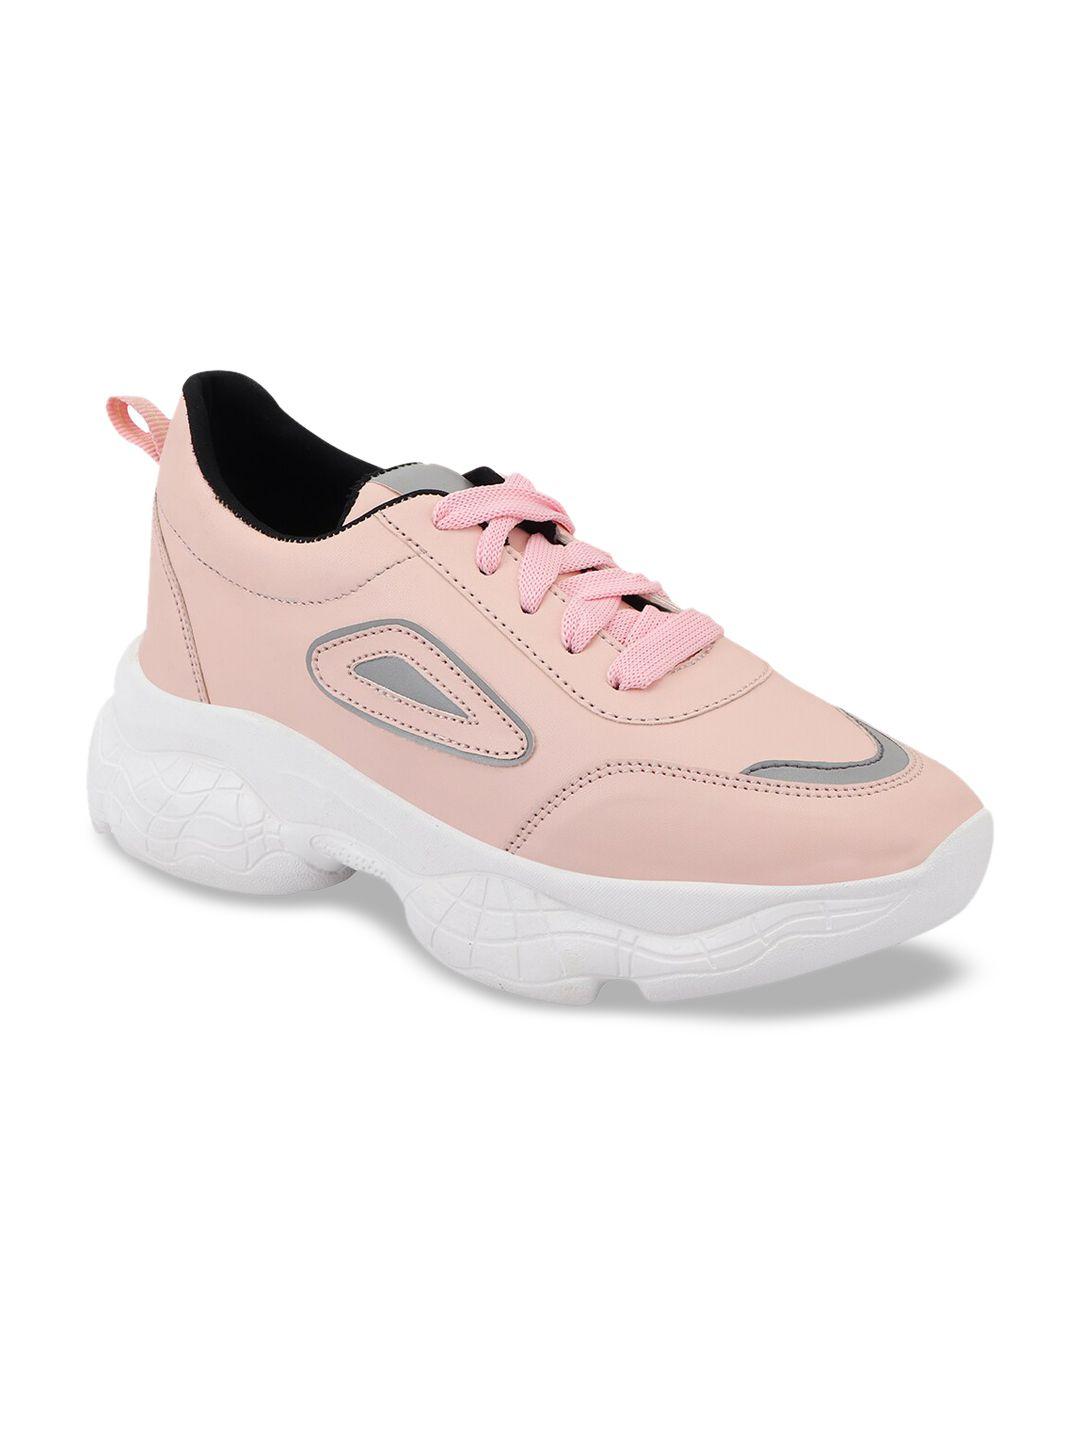 shoetopia girls rose pink & grey colourblocked sneakers